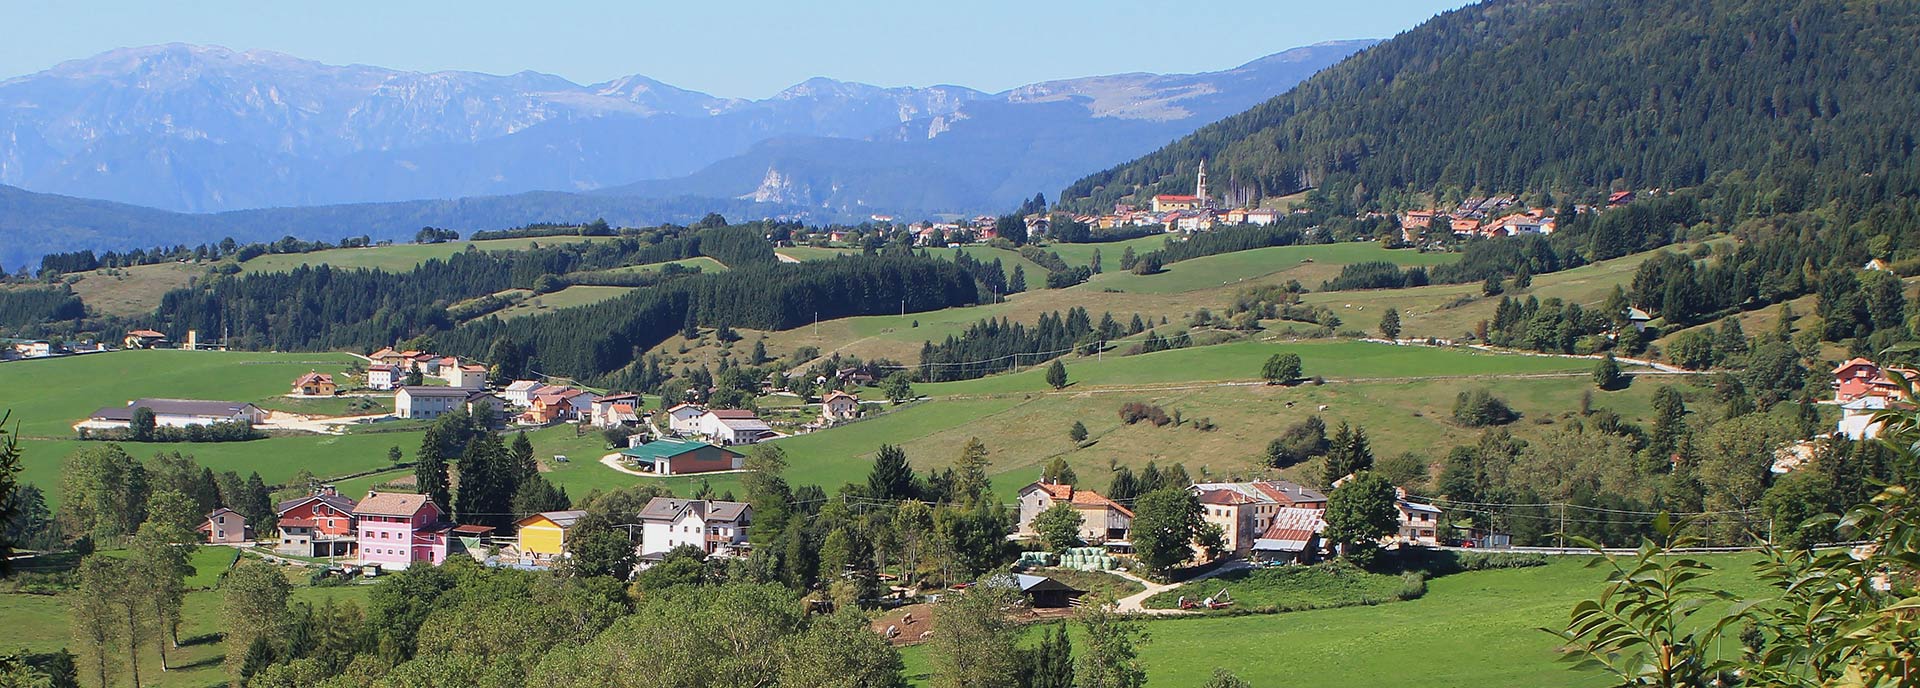 The panorama of Mezzaselva di Roana